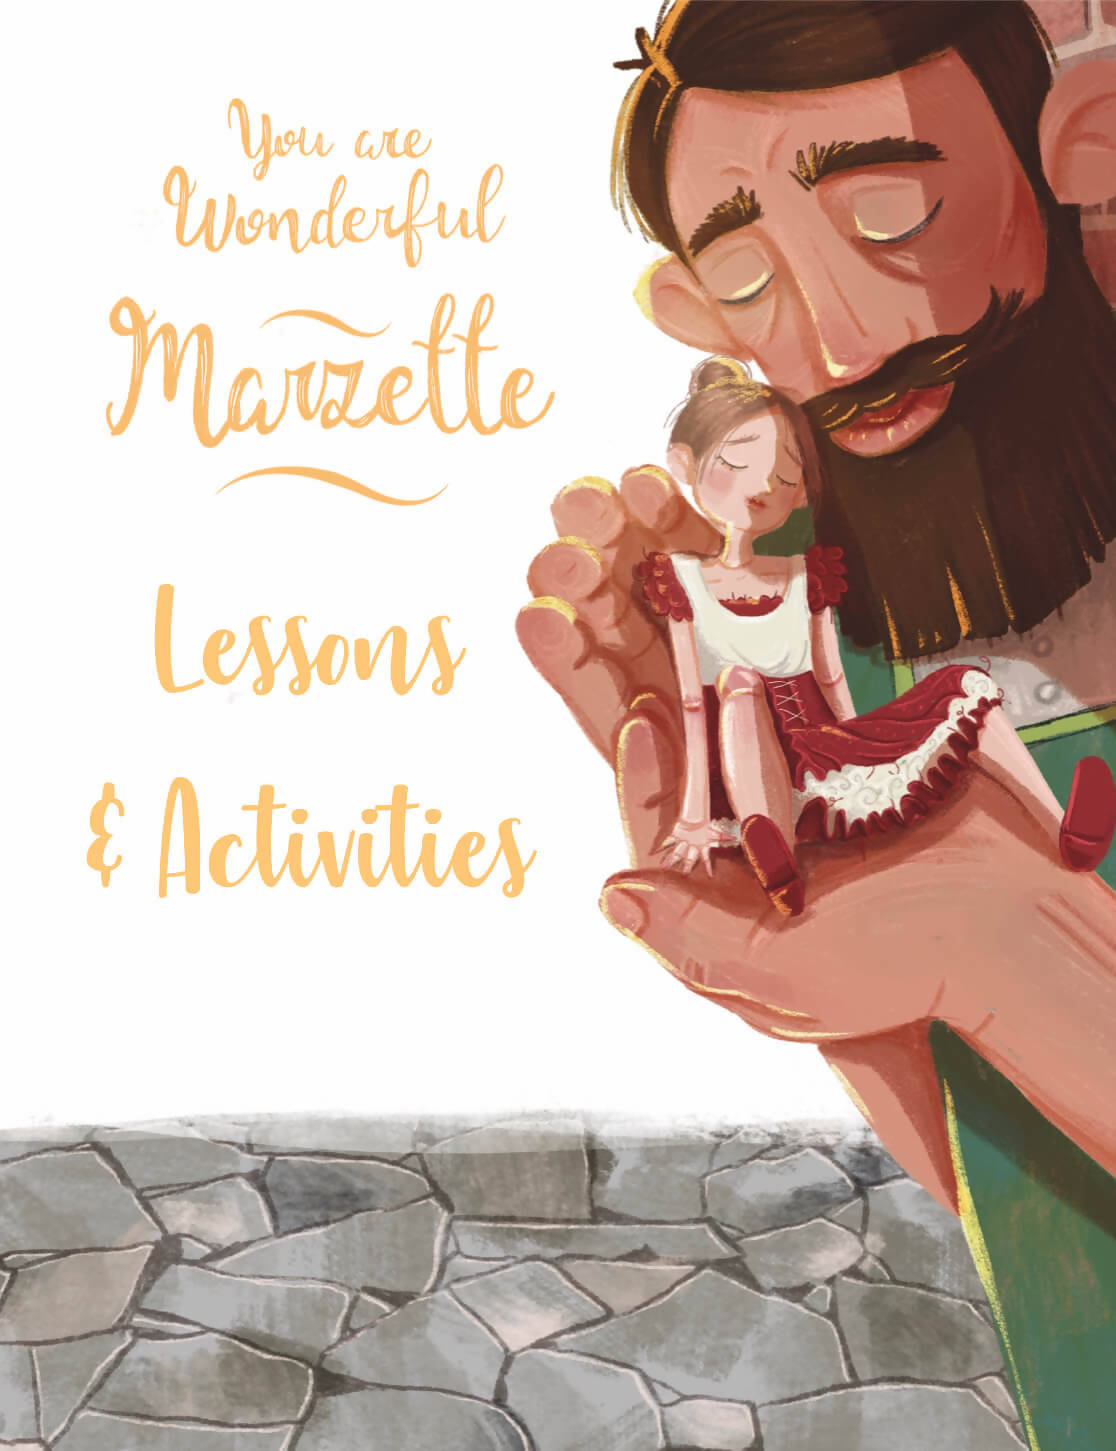 Marzette: You Are Wonderful Lesson Plans